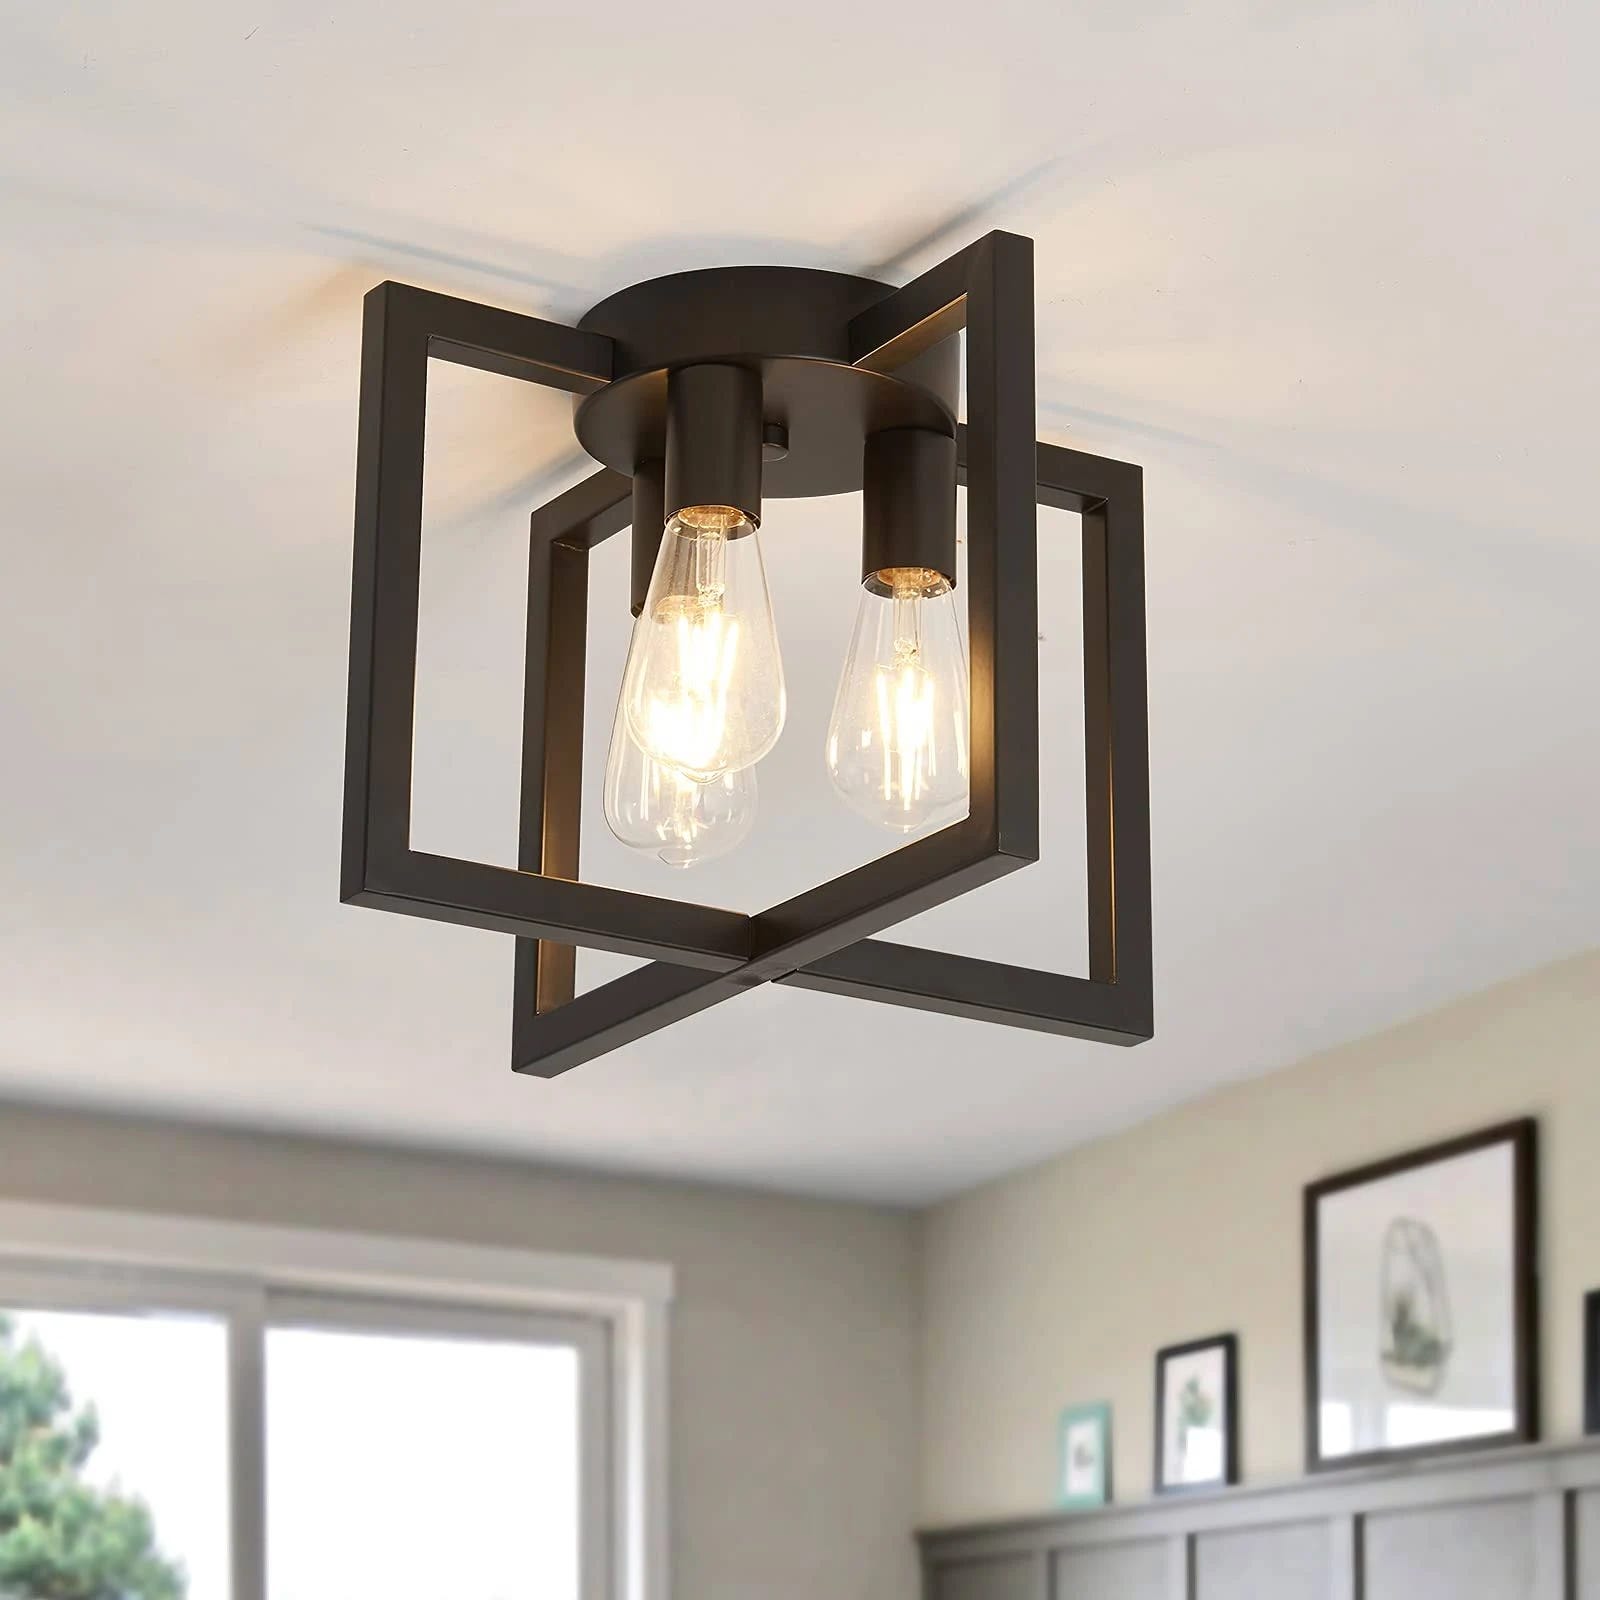 Vintage-Inspired 3-Light Ceiling Chandelier for Home | Image